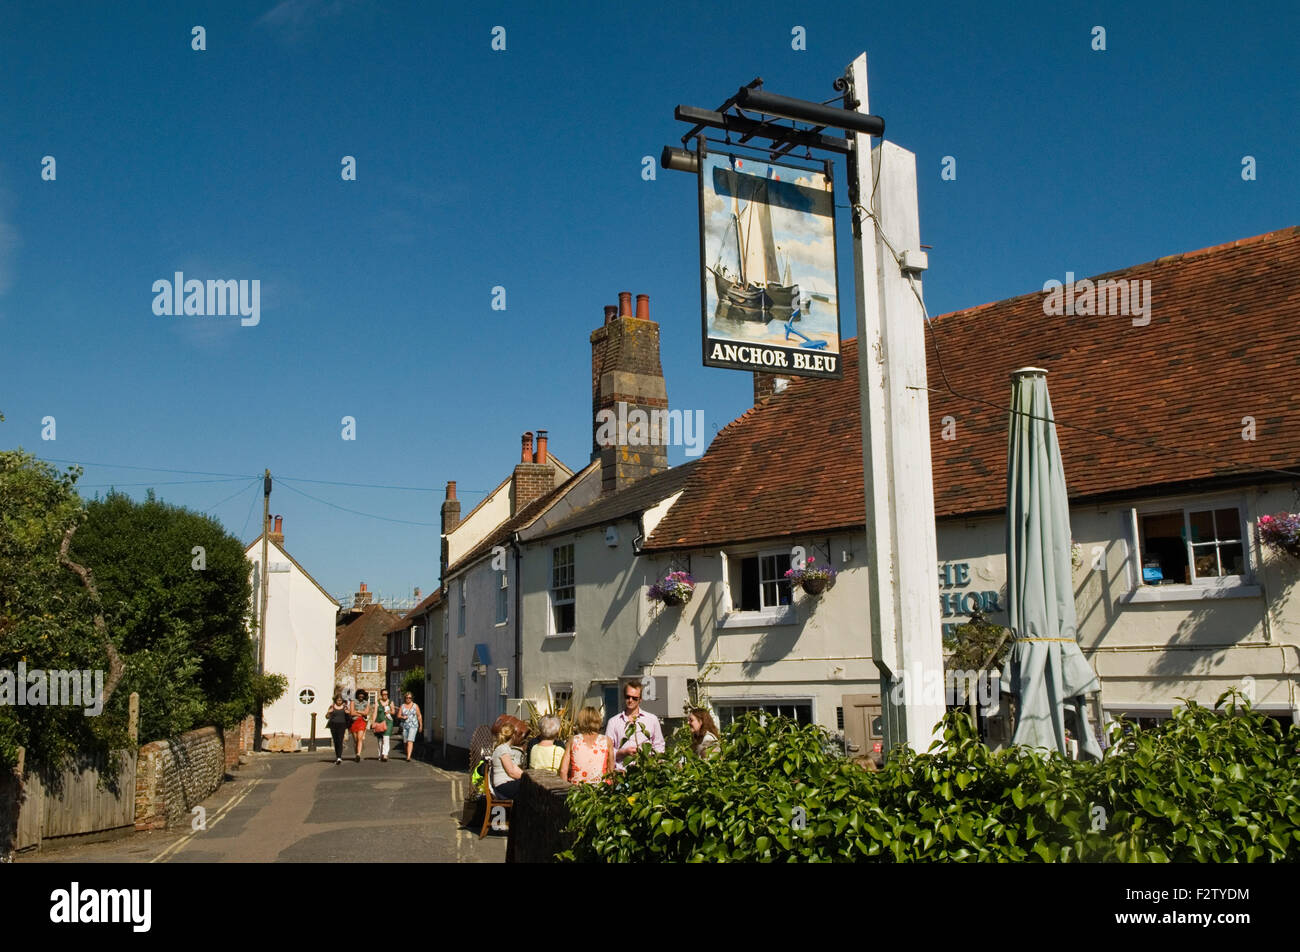 Pretty English village on the south coast England Bosham West Sussex  The Anchor Bleu pub 2010s 2015 UK HOMER SYKES Stock Photo